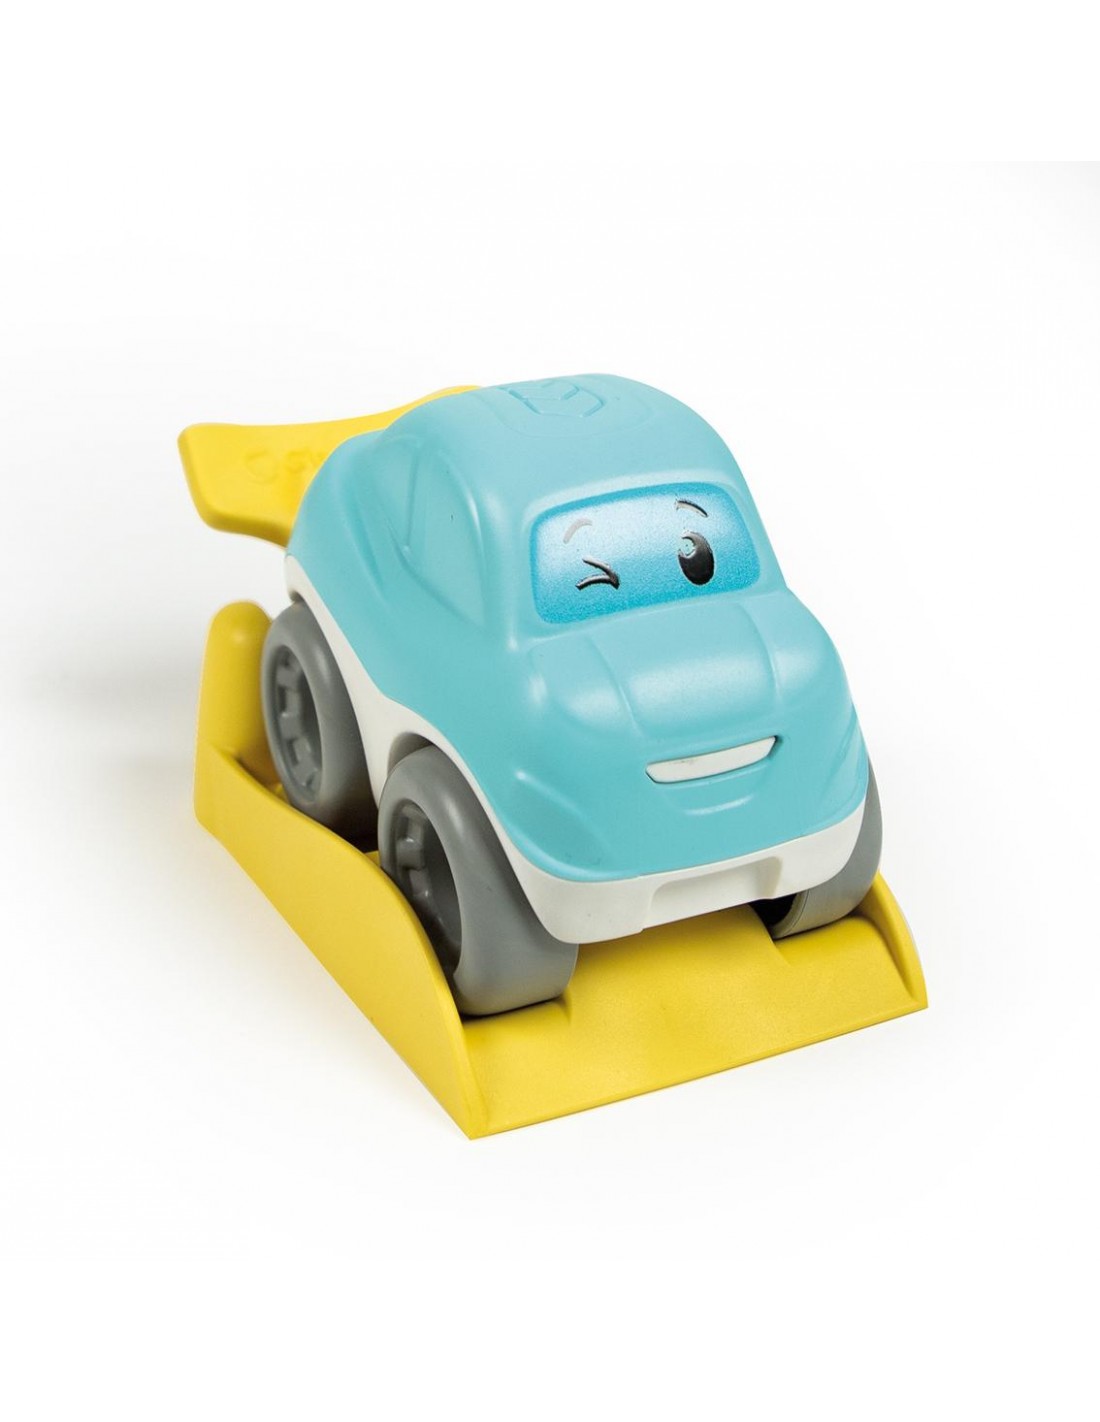 Baby clementoni βρεφικό παιχνίδι αυτοκινητάκια run &amp; roll από ανακυκλώμενα υλικά  1000-17429 - BABY CLEMENTONI